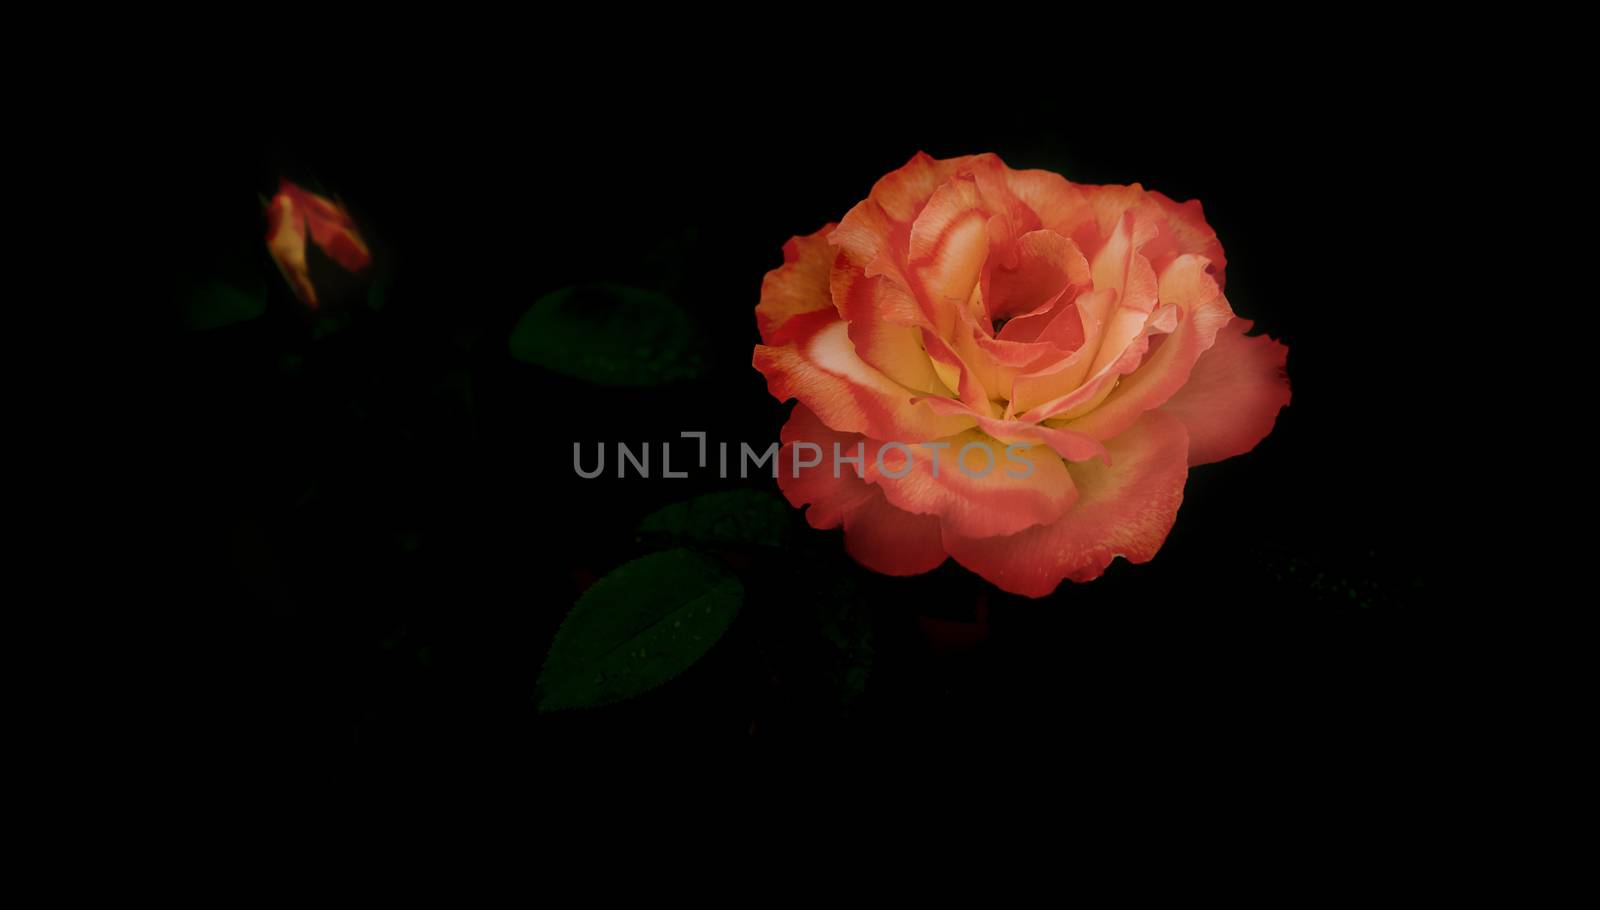 Rose flower on dark to black background by sherj